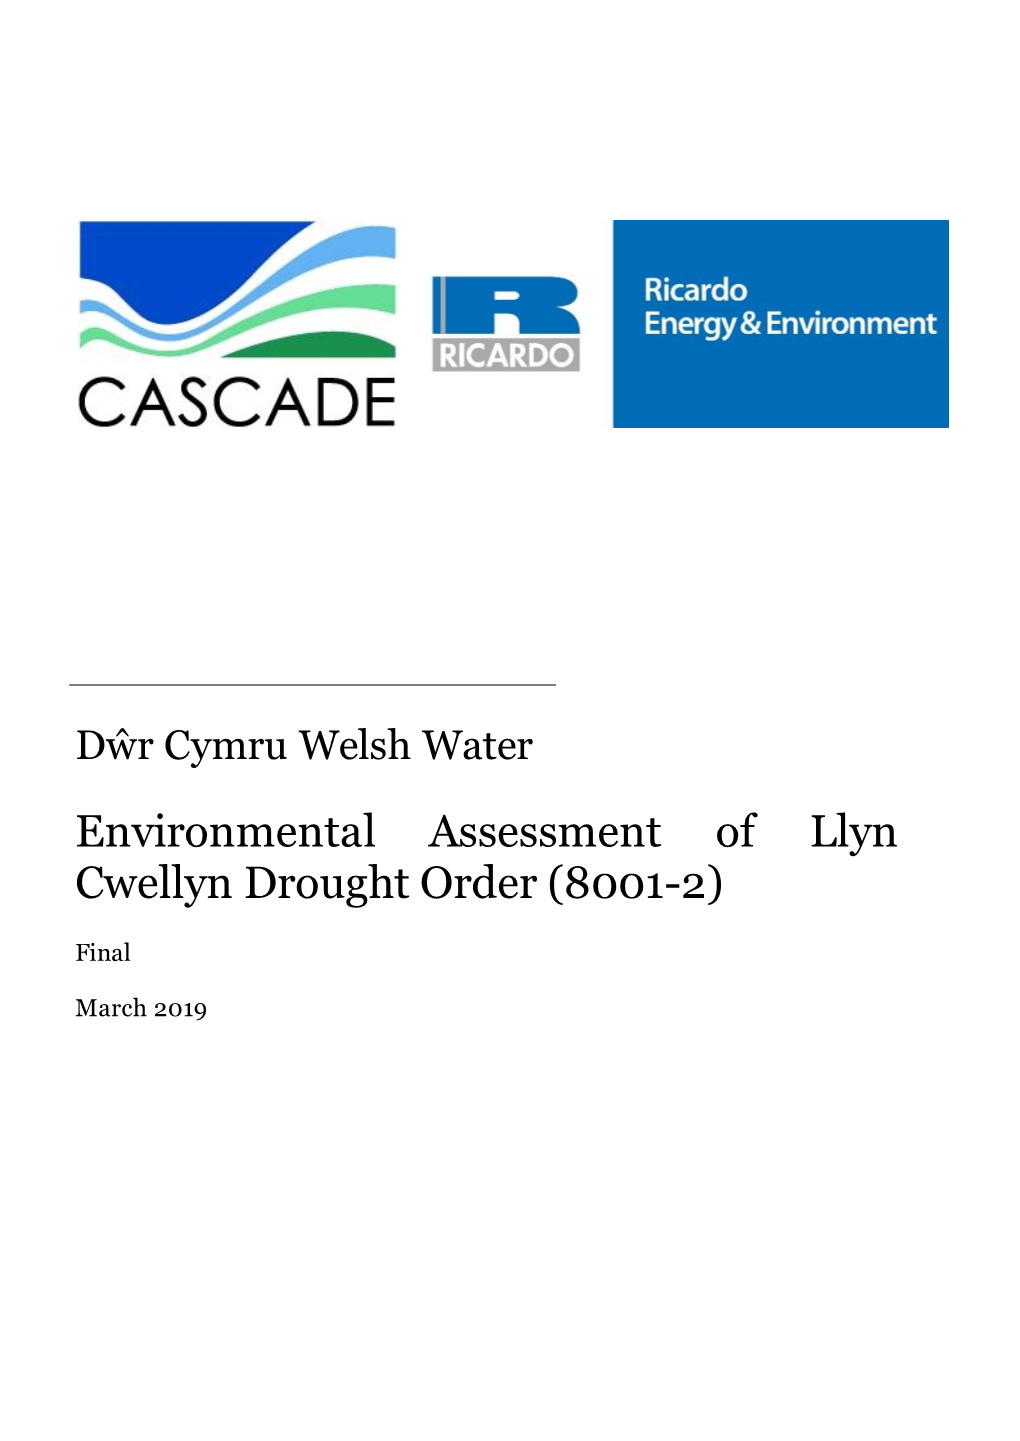 Environmental Assessment of Llyn Cwellyn Drought Order (8001-2)